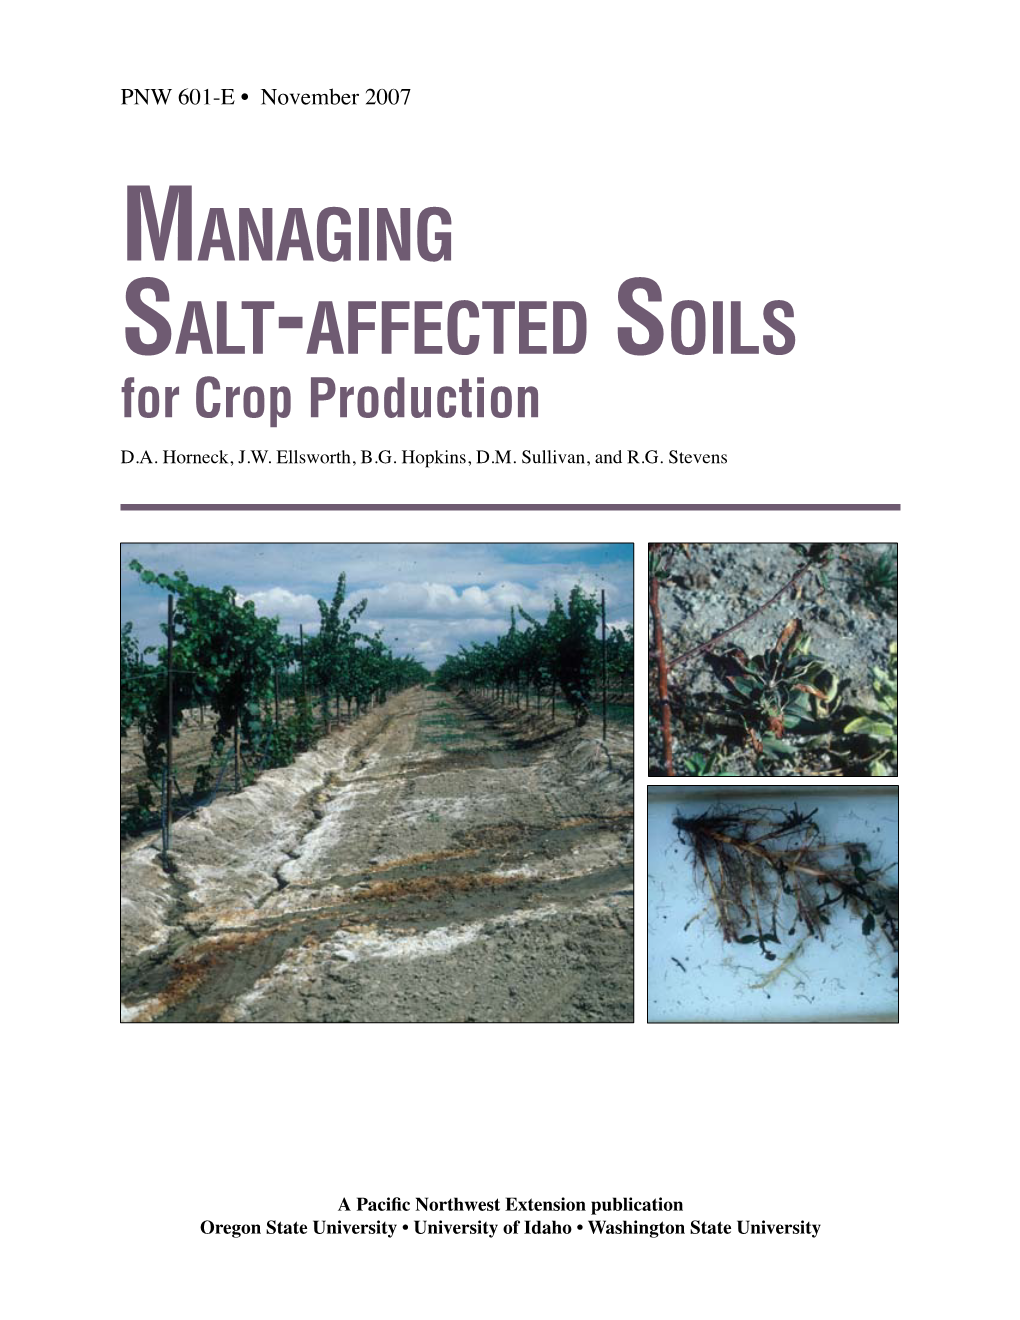 Managing Salt-Affected Soils for Crop Production, PNW 601-E